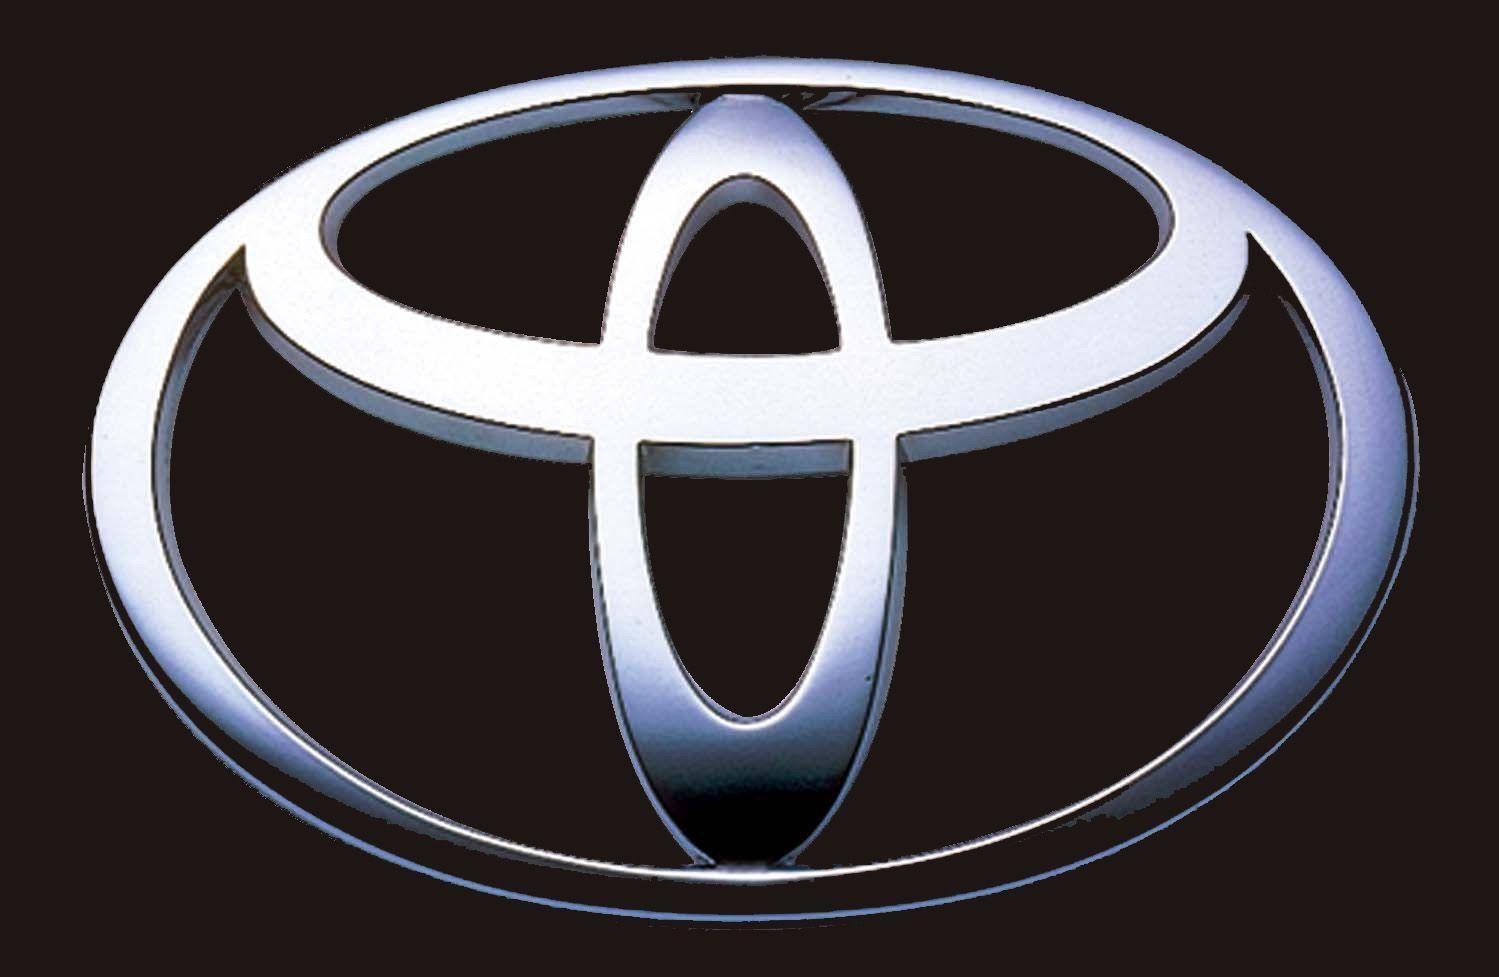 Toyota Emblem Wallpapers Top Free Toyota Emblem Backgrounds WallpaperAccess